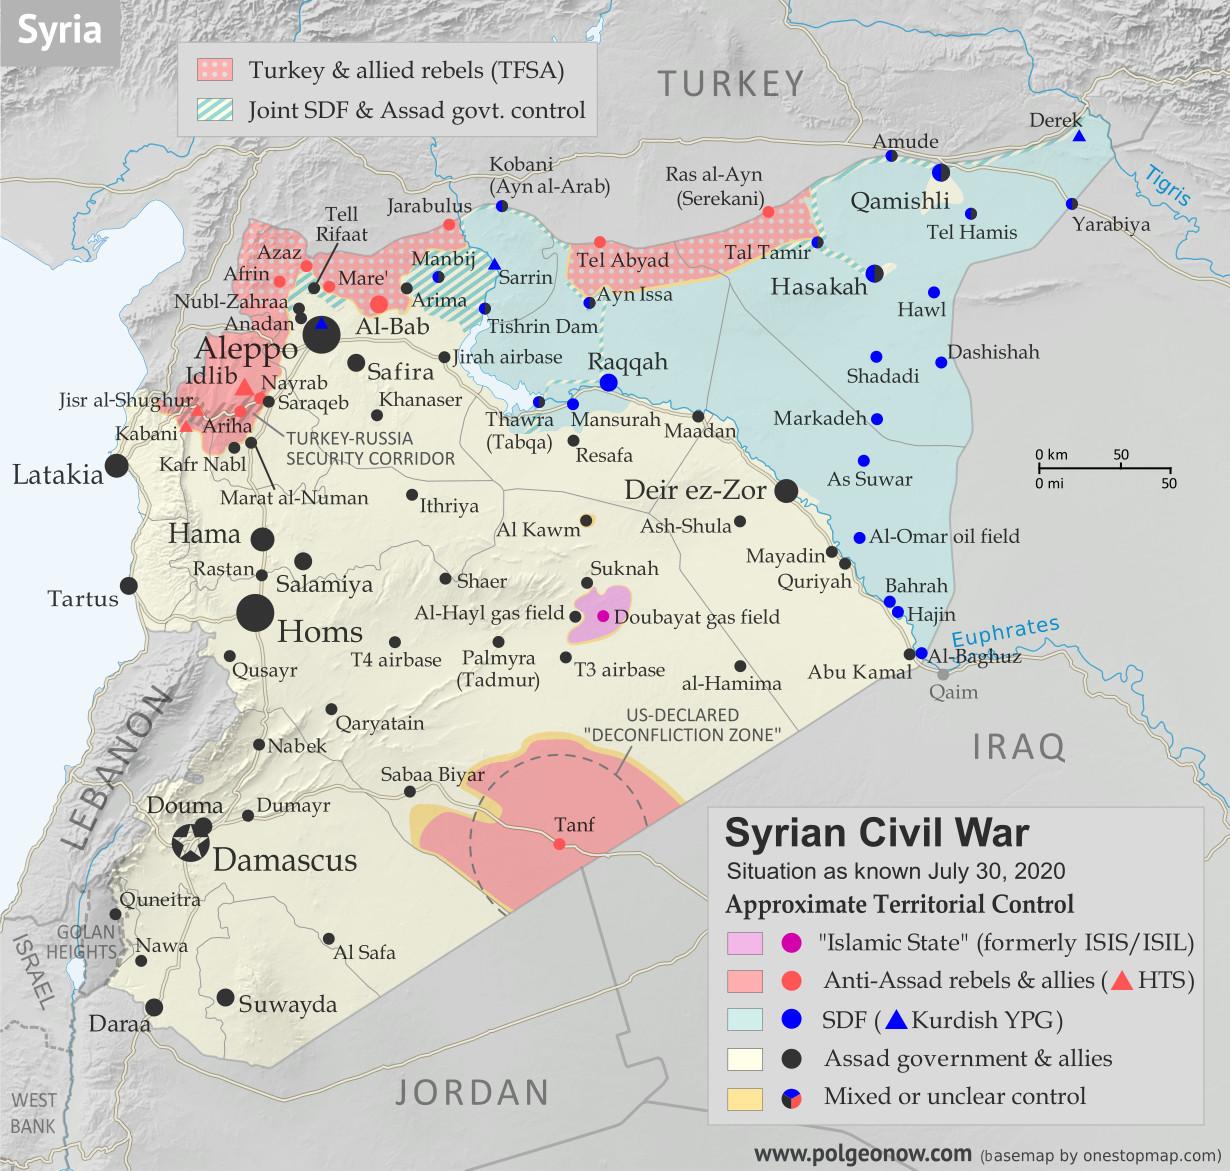 Syria – Civil War